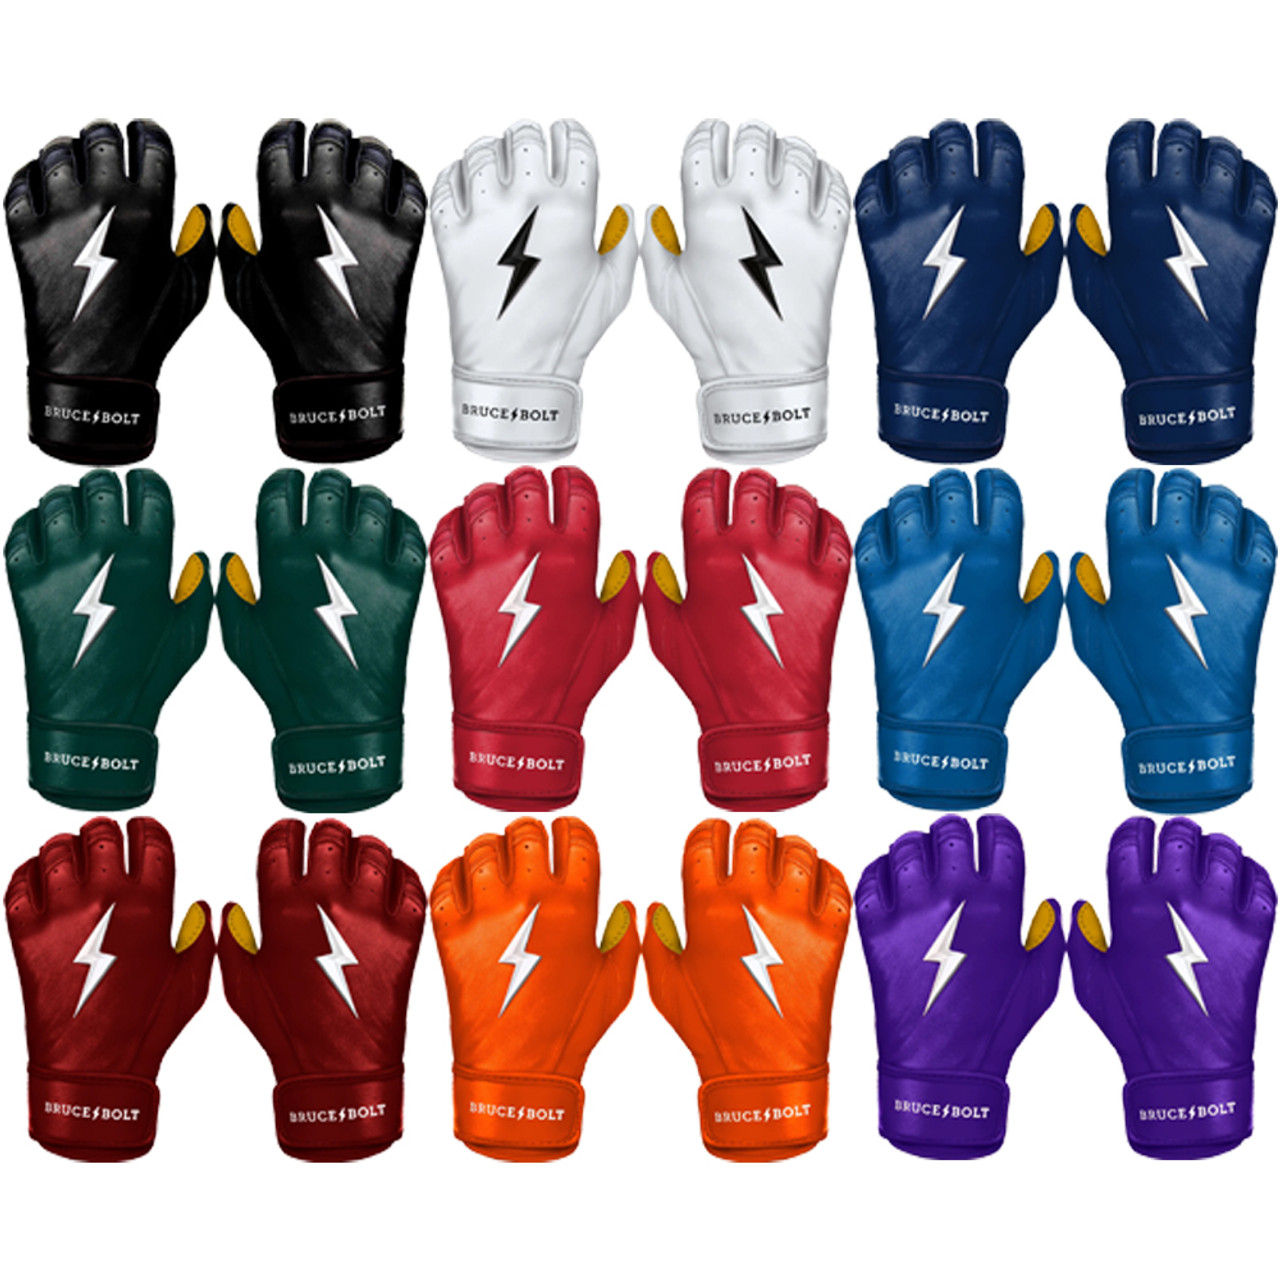 Team Issued Batting Gloves - Bruce Bolt - Blue, Orange and Grey